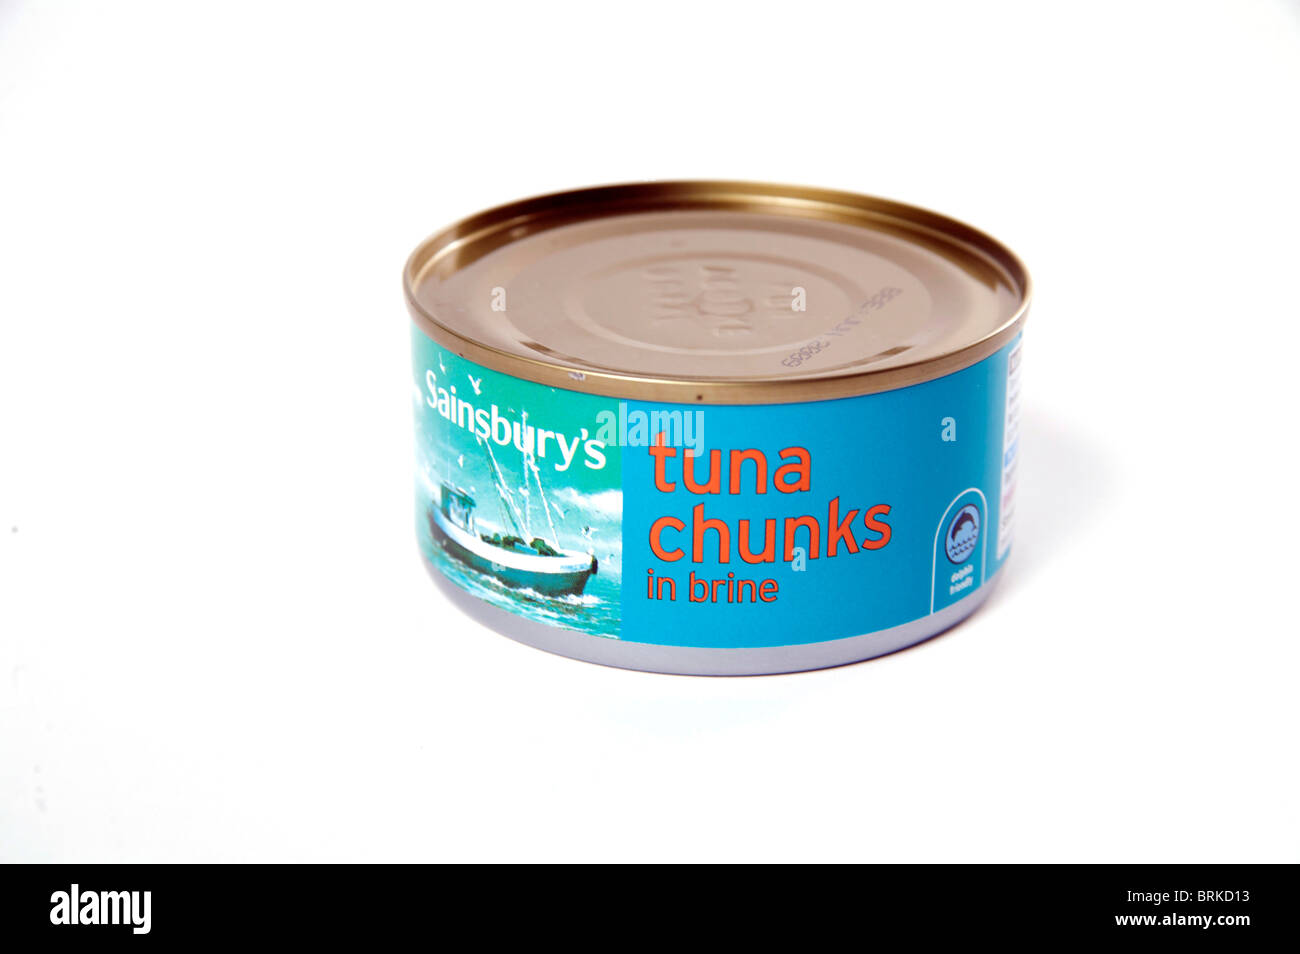 A tin of Sainsbury's tuna chunks in brine with label. Stock Photo